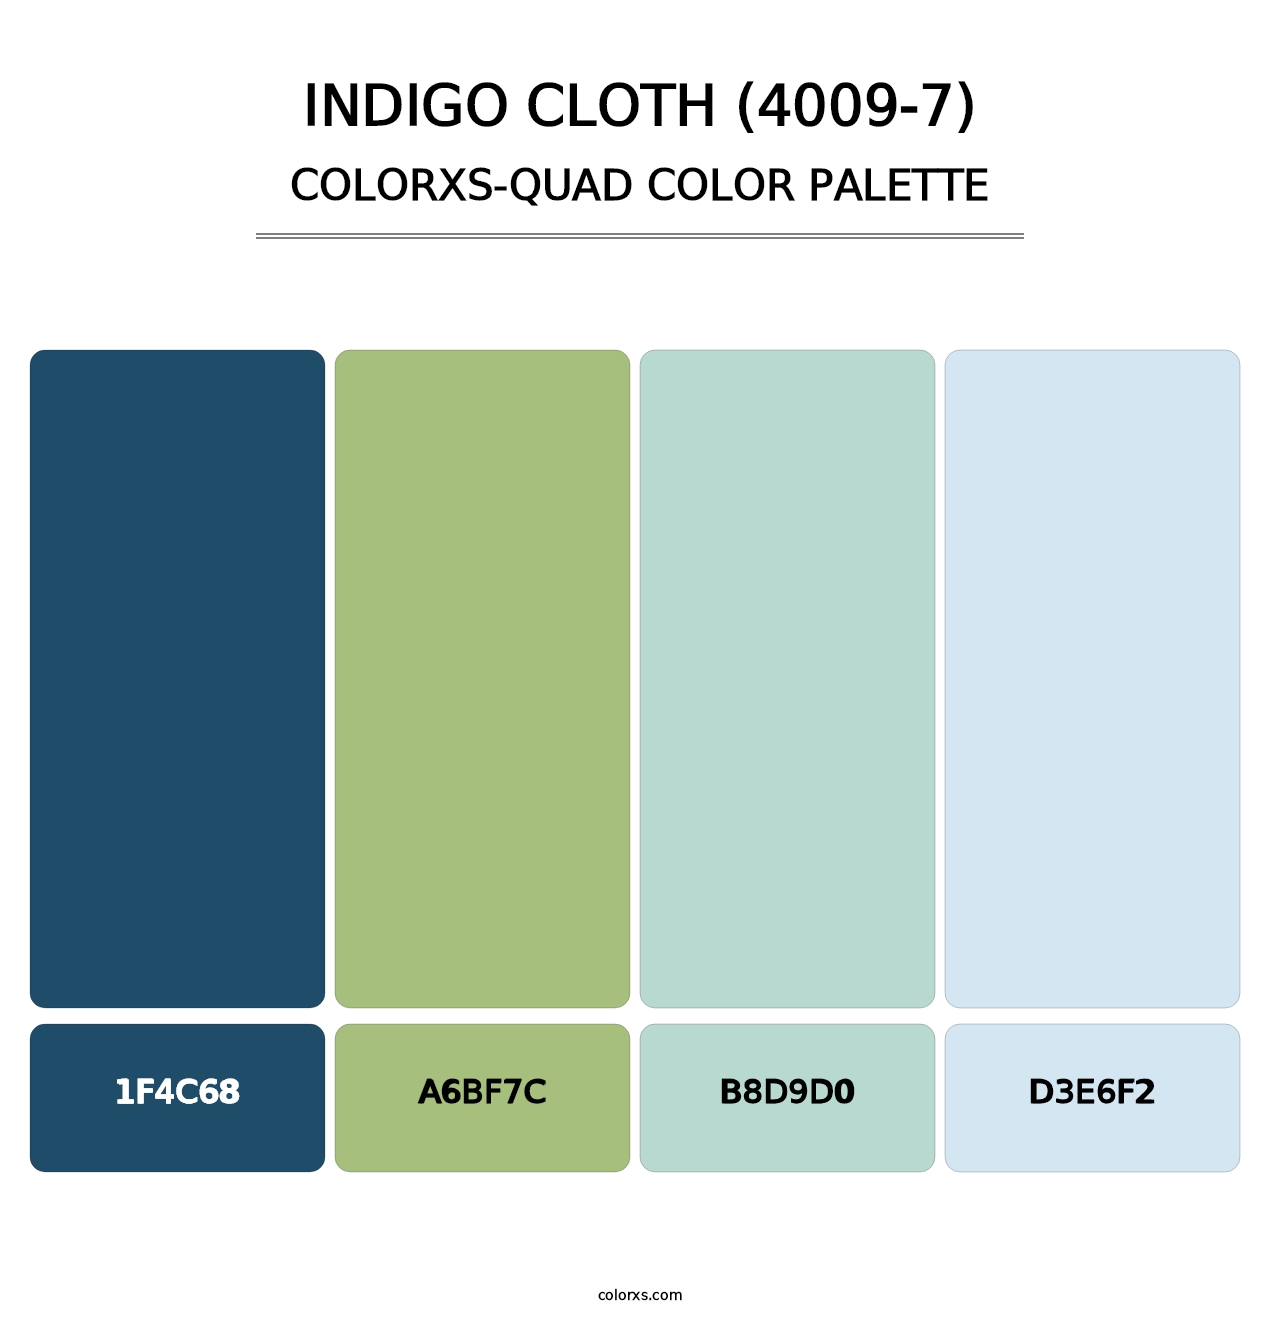 Indigo Cloth (4009-7) - Colorxs Quad Palette